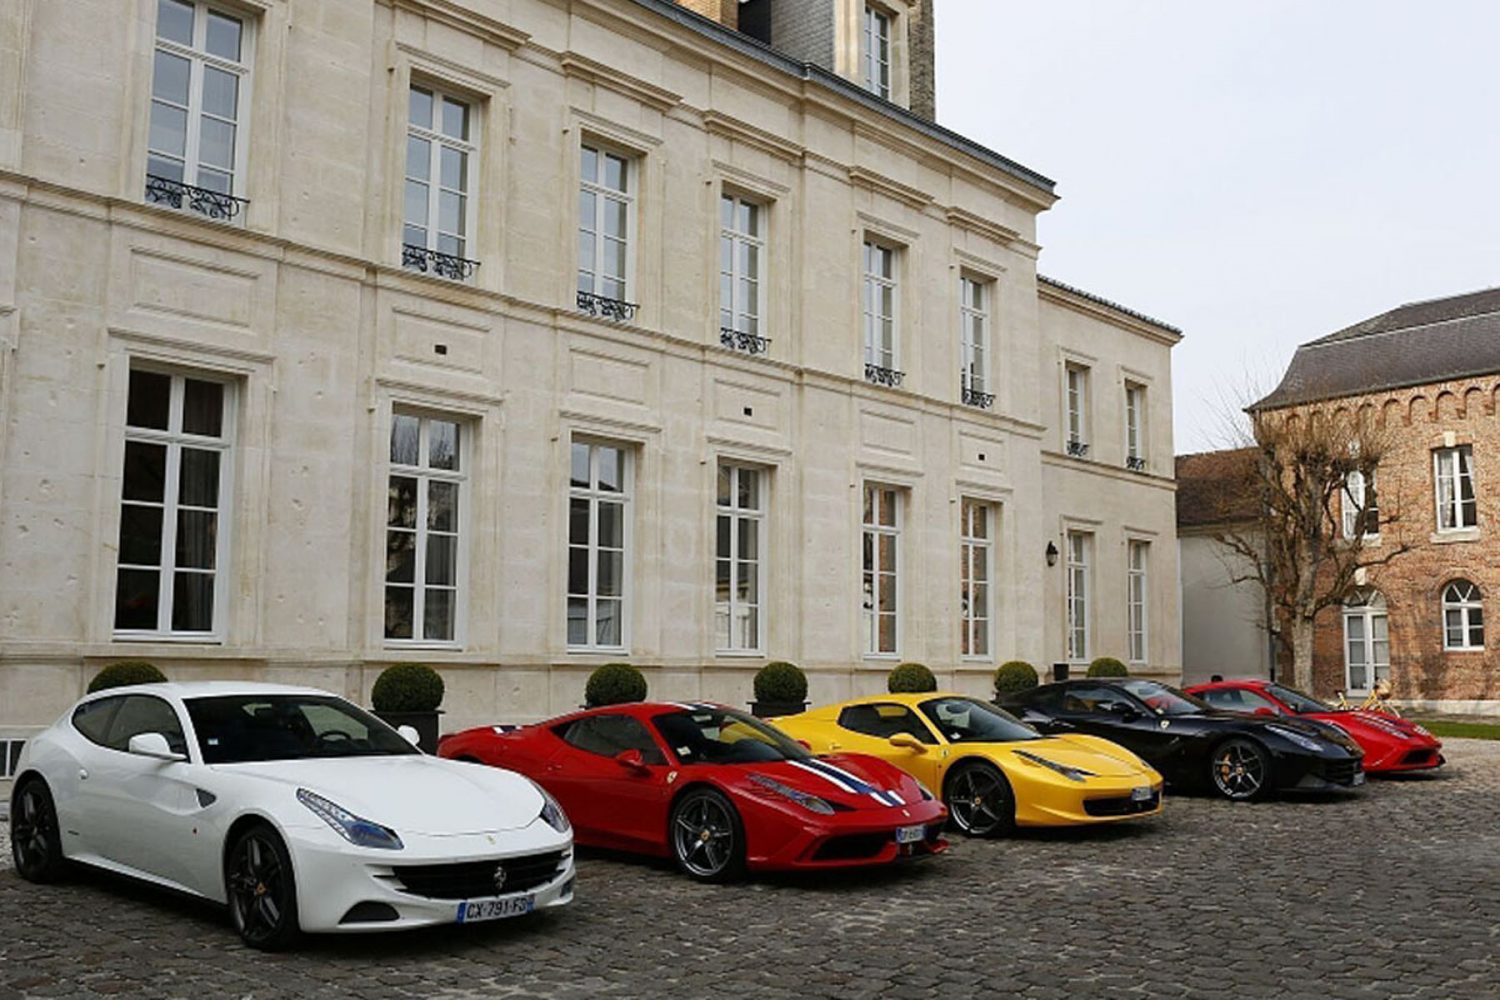 Ferrari e Veuve Clicquot Ponsardin